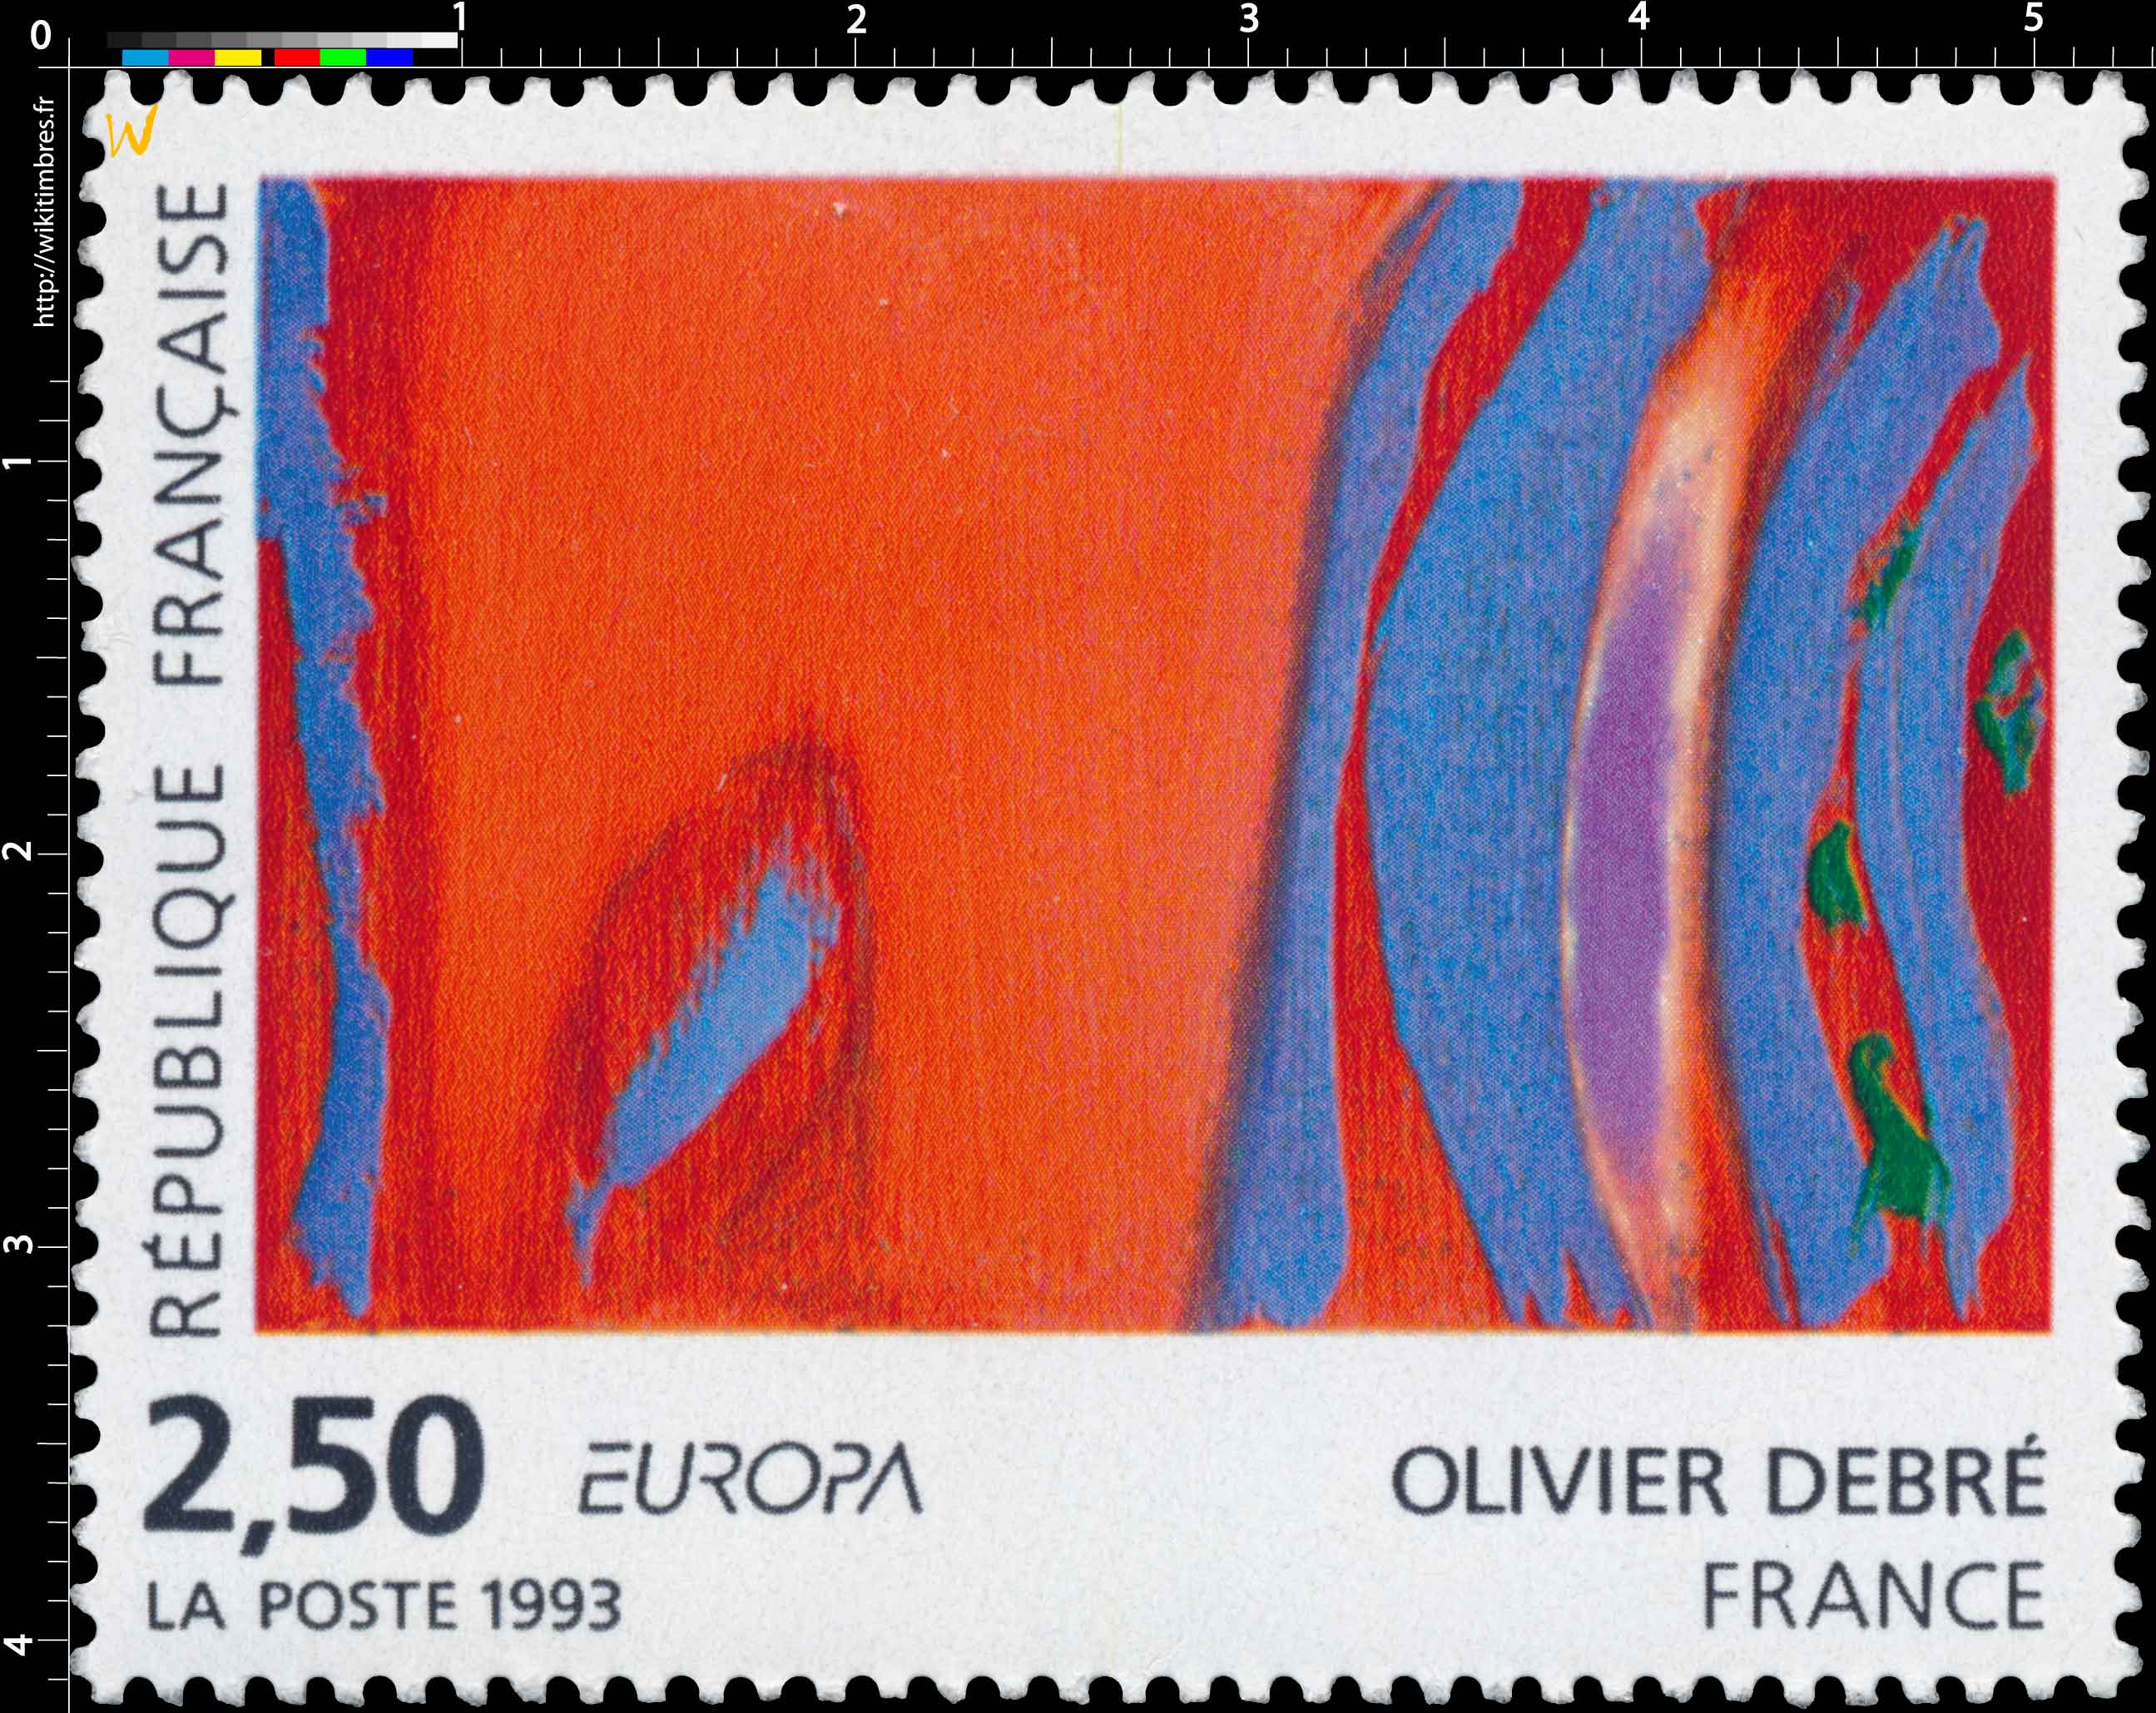 1993 EUROPA OLIVIER DEBRÉ